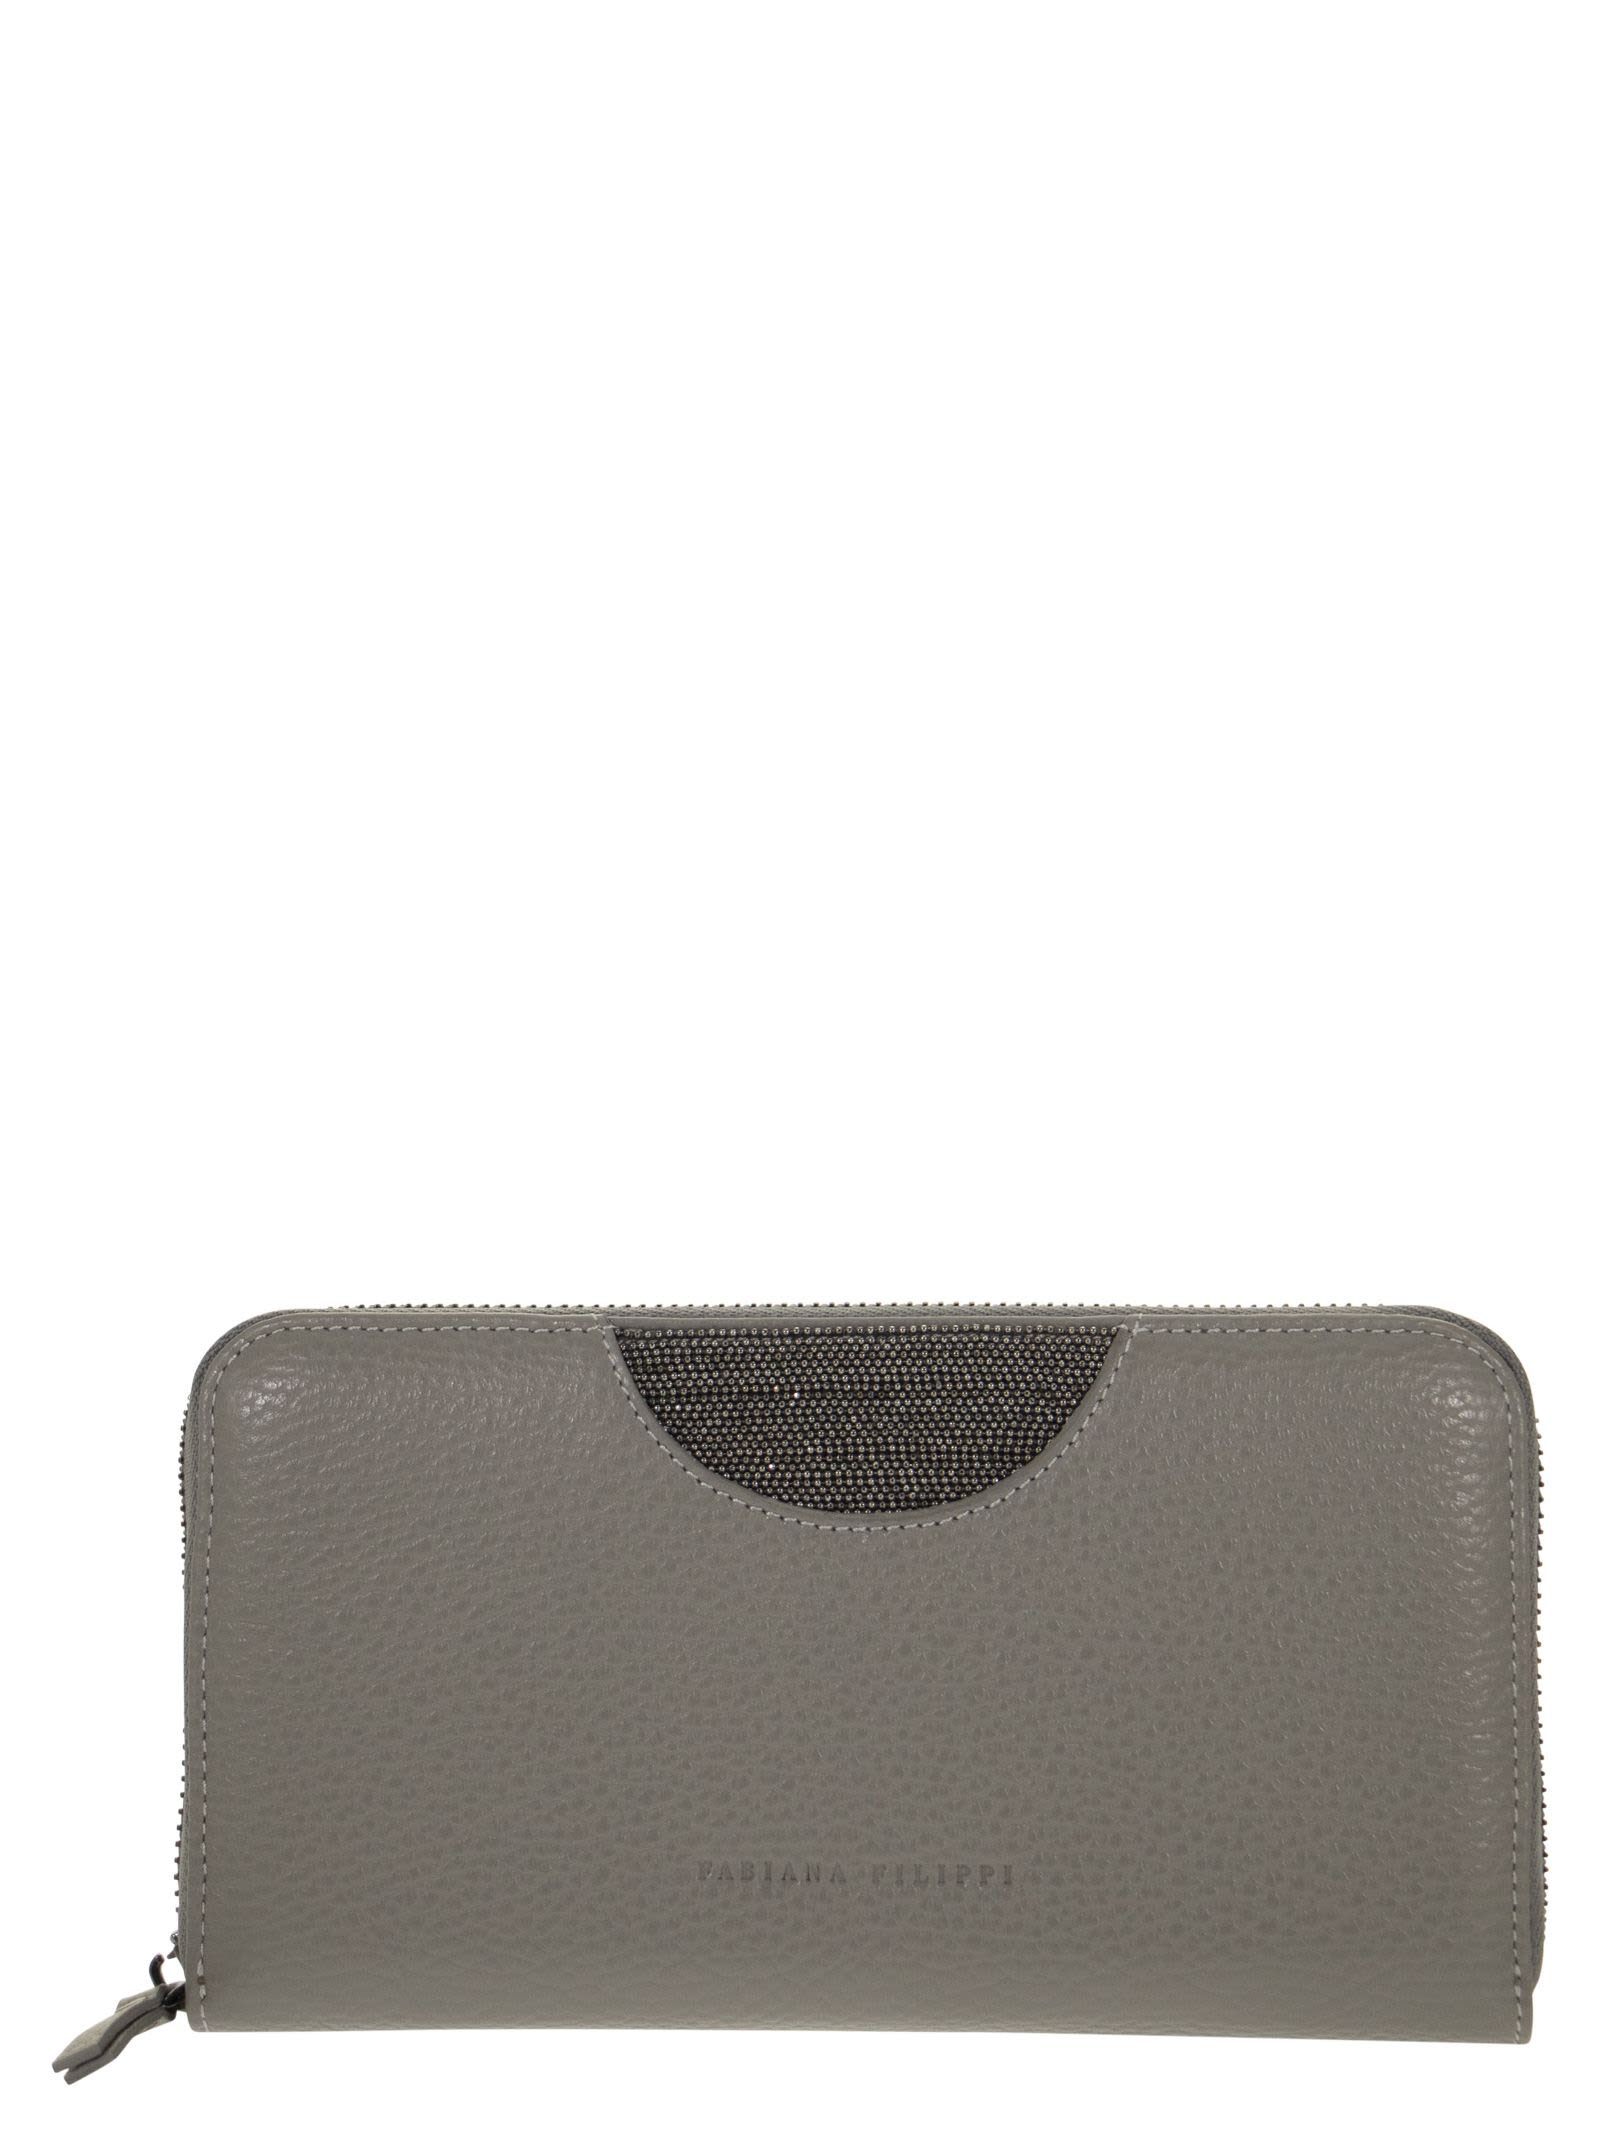 Fabiana Filippi Leather Wallet